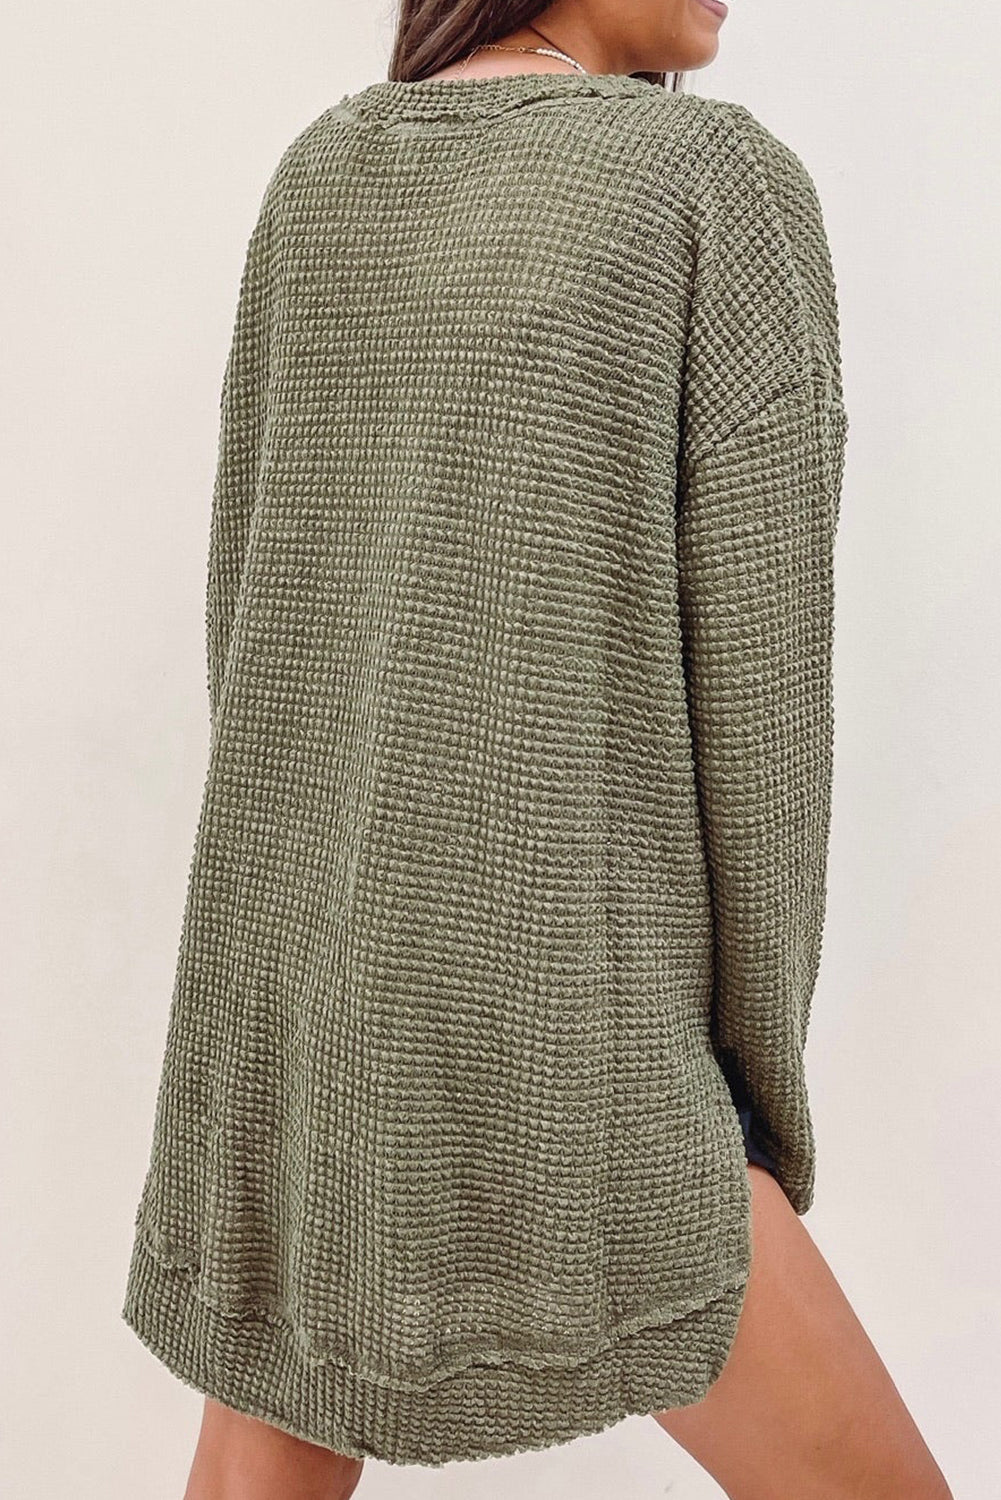 Moss Green Plus Size Textured Knit Long Sleeve Top - SELFTRITSS